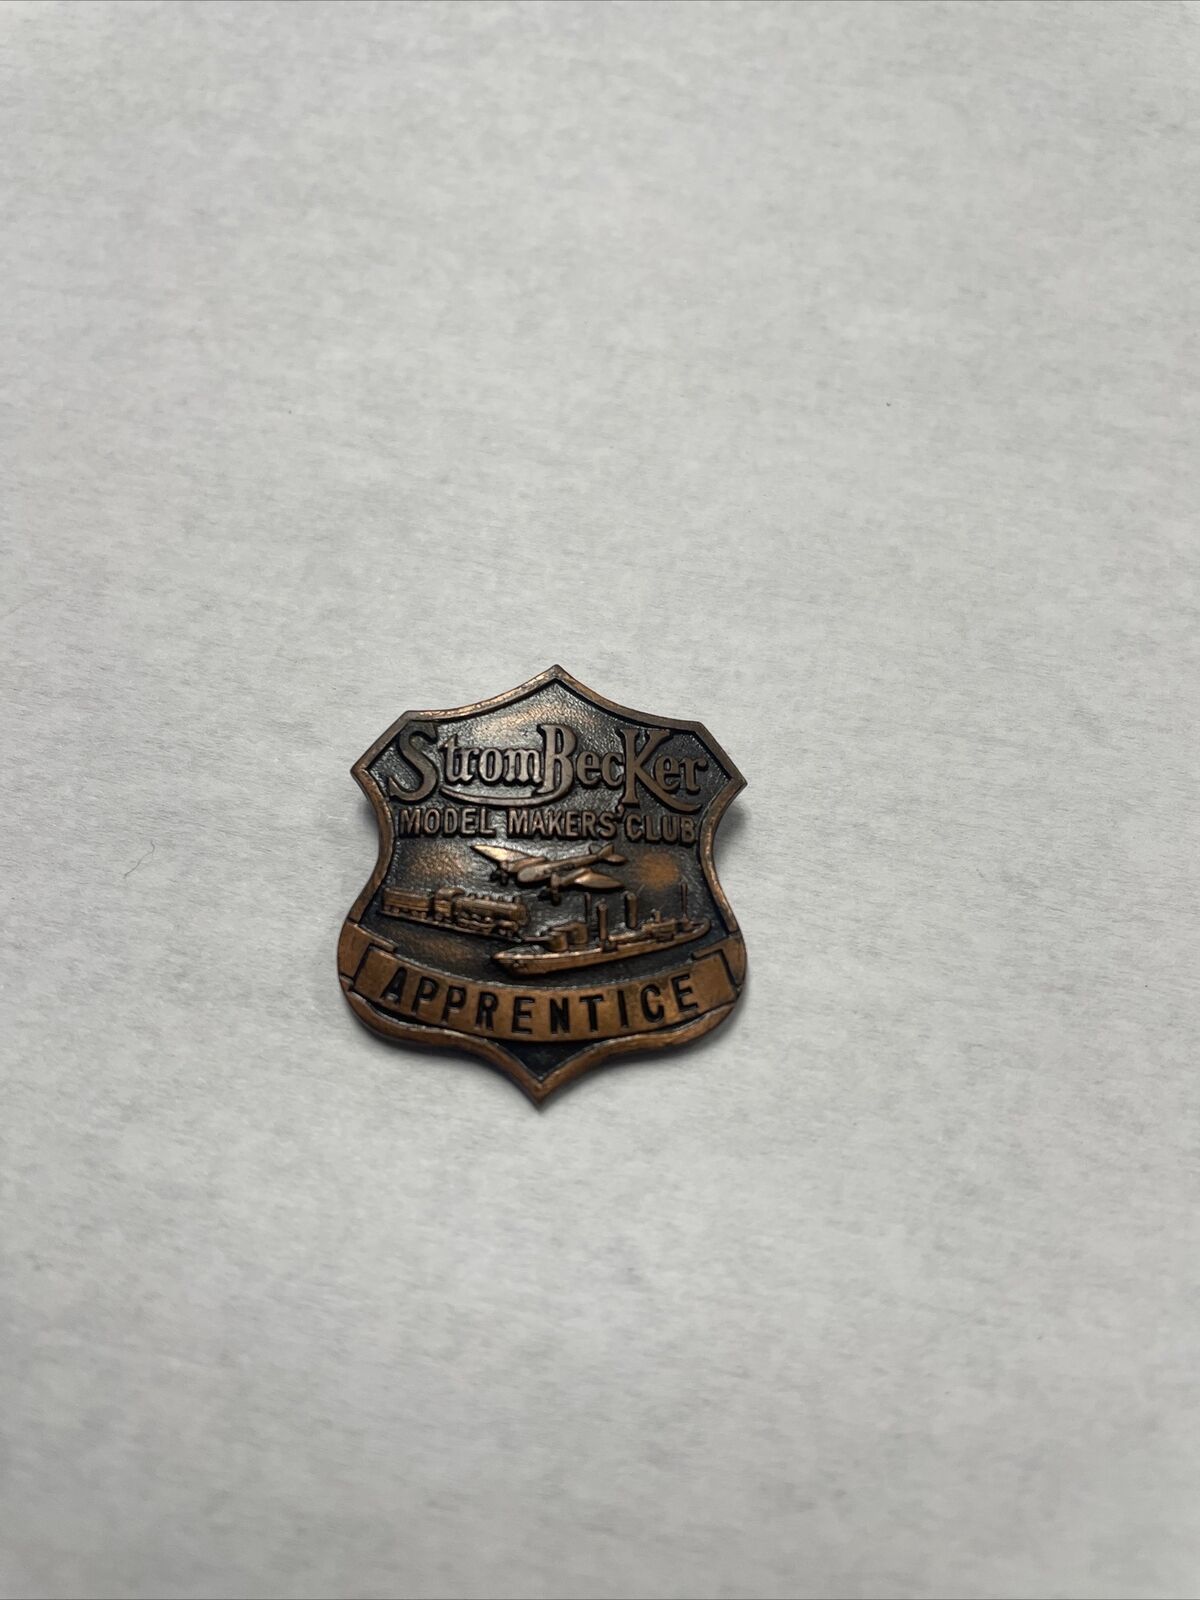 Rare Vintage Apprentice Strombecker Model Makers Club Brass Badge, original